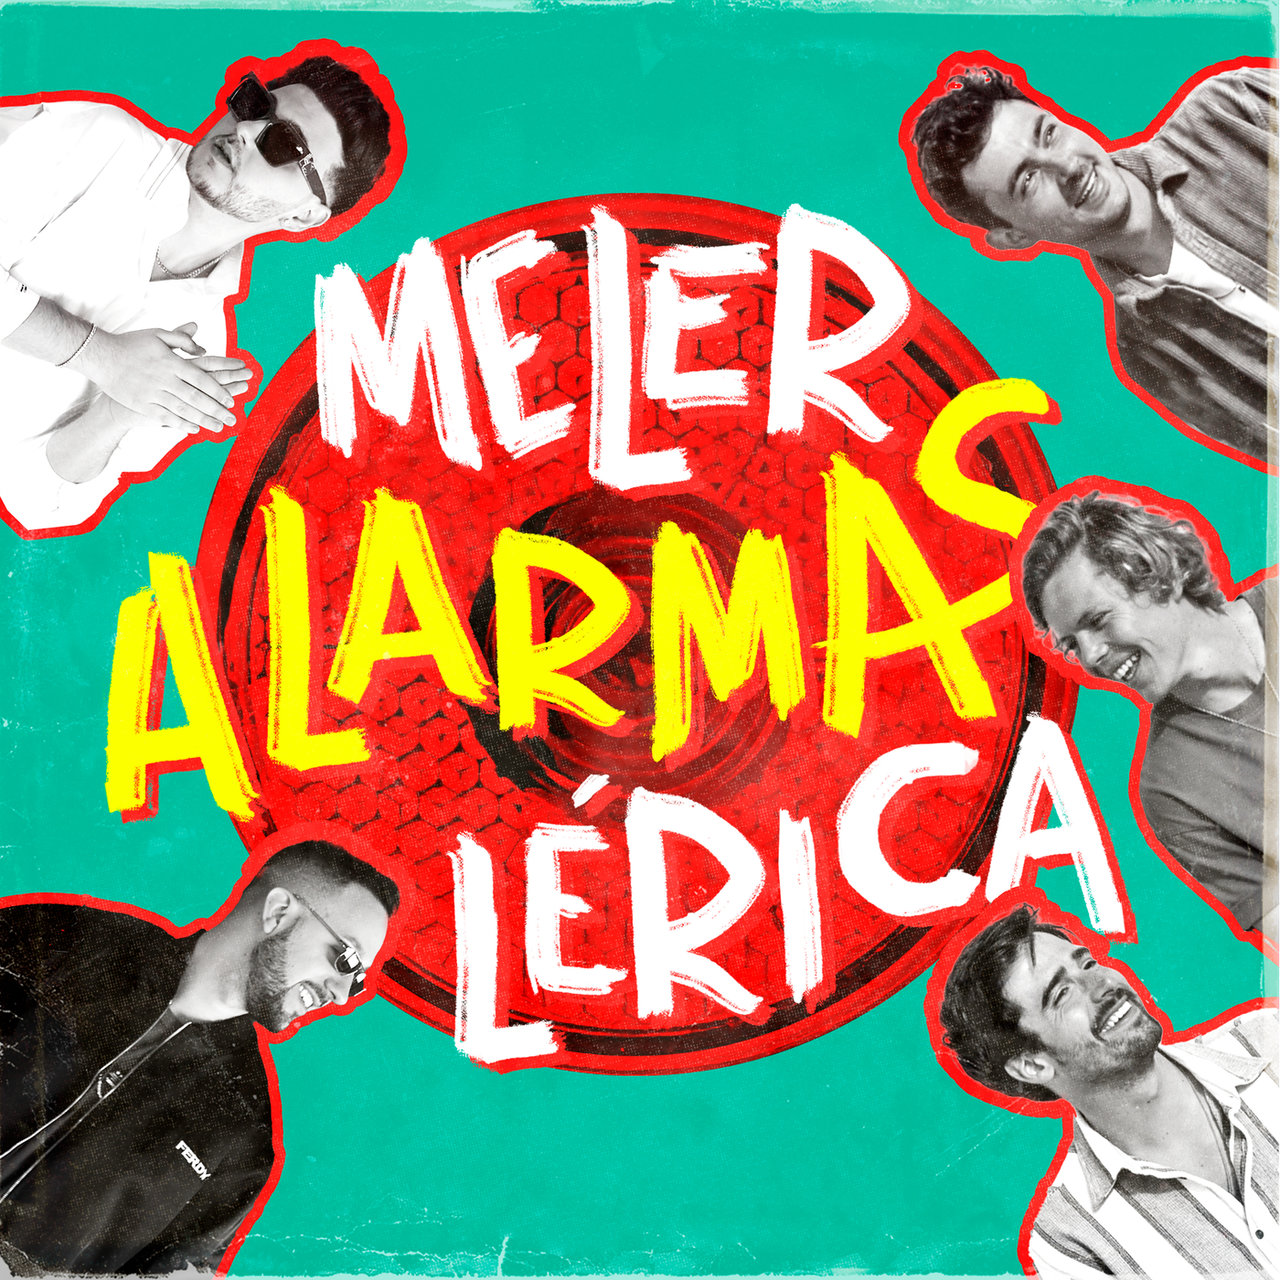 MELER ft. featuring Lérica Alarmas cover artwork